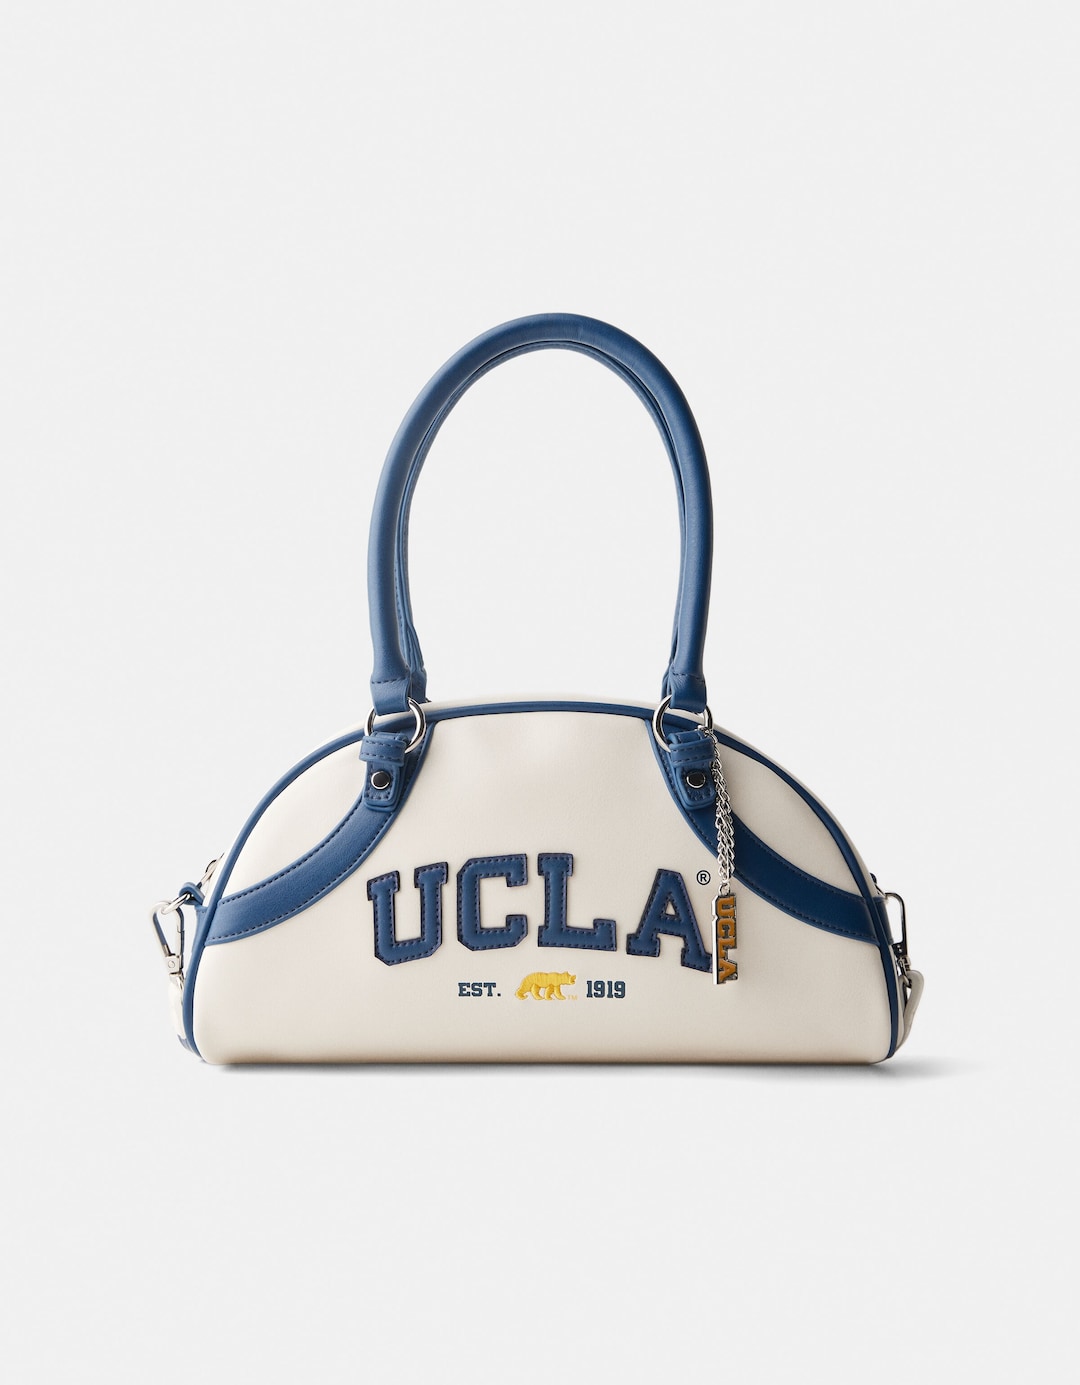 Mini UCLA bovling kol çantası